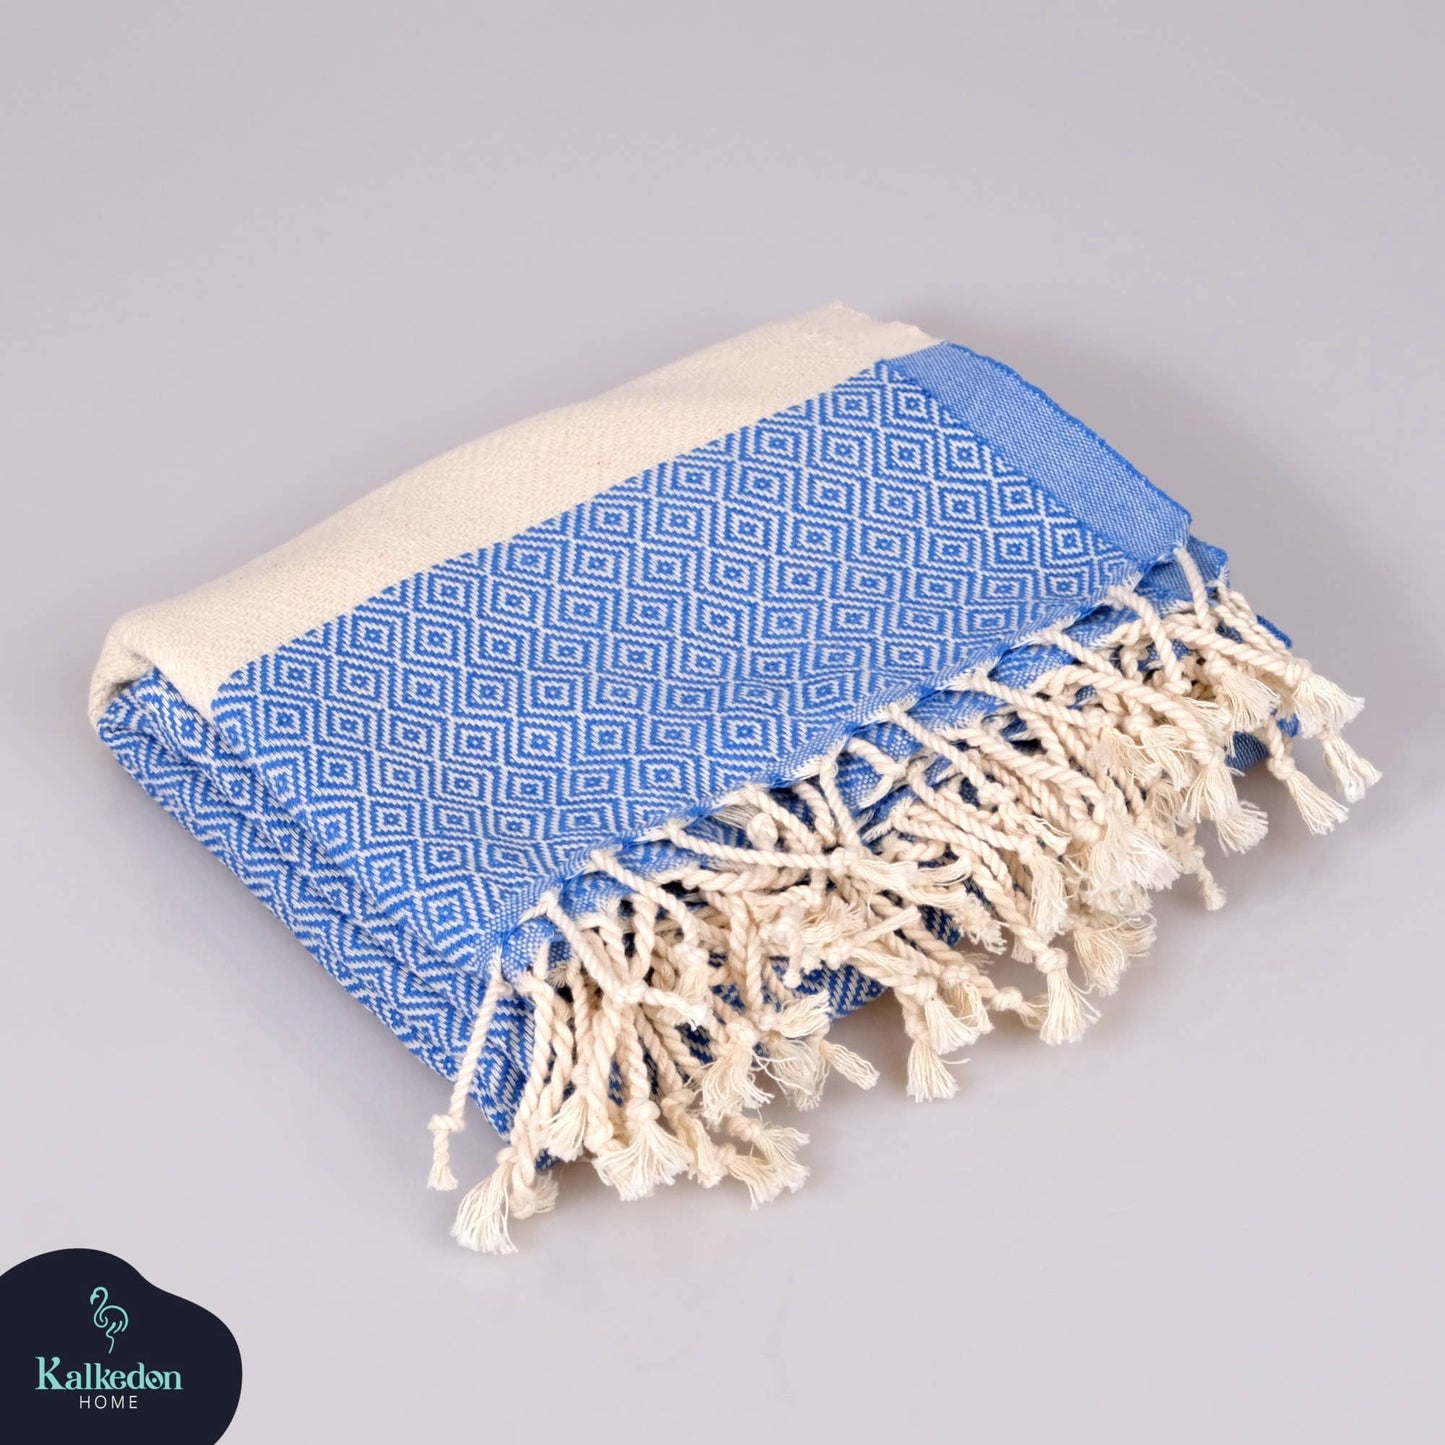 Turkish Towel | Peshtemal | Sand Resistant Beach Towel….Blue